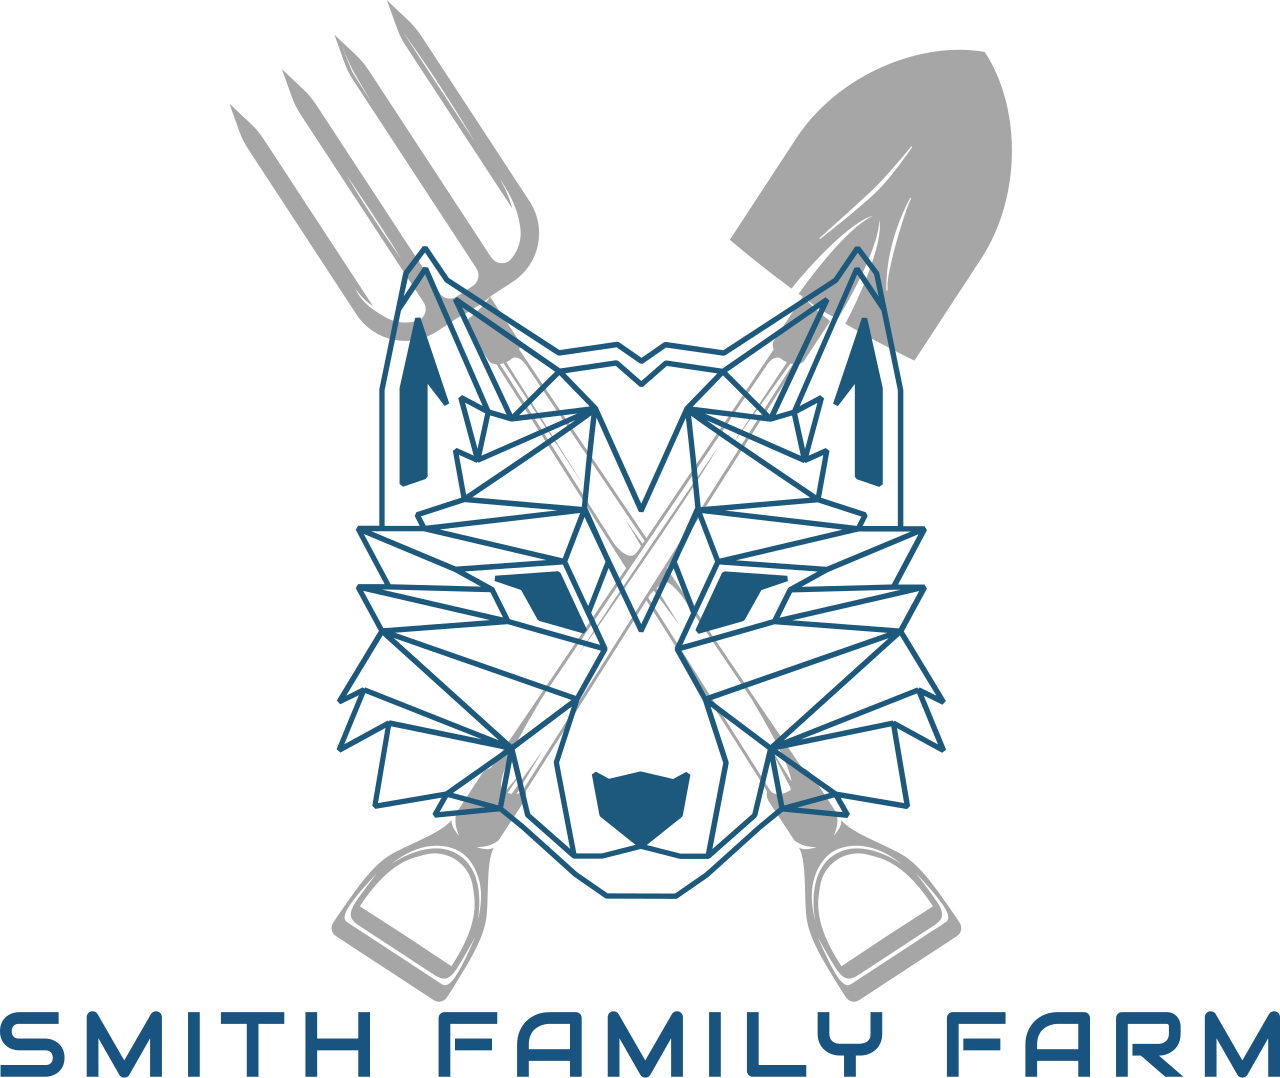 Smith Family Farm's logo